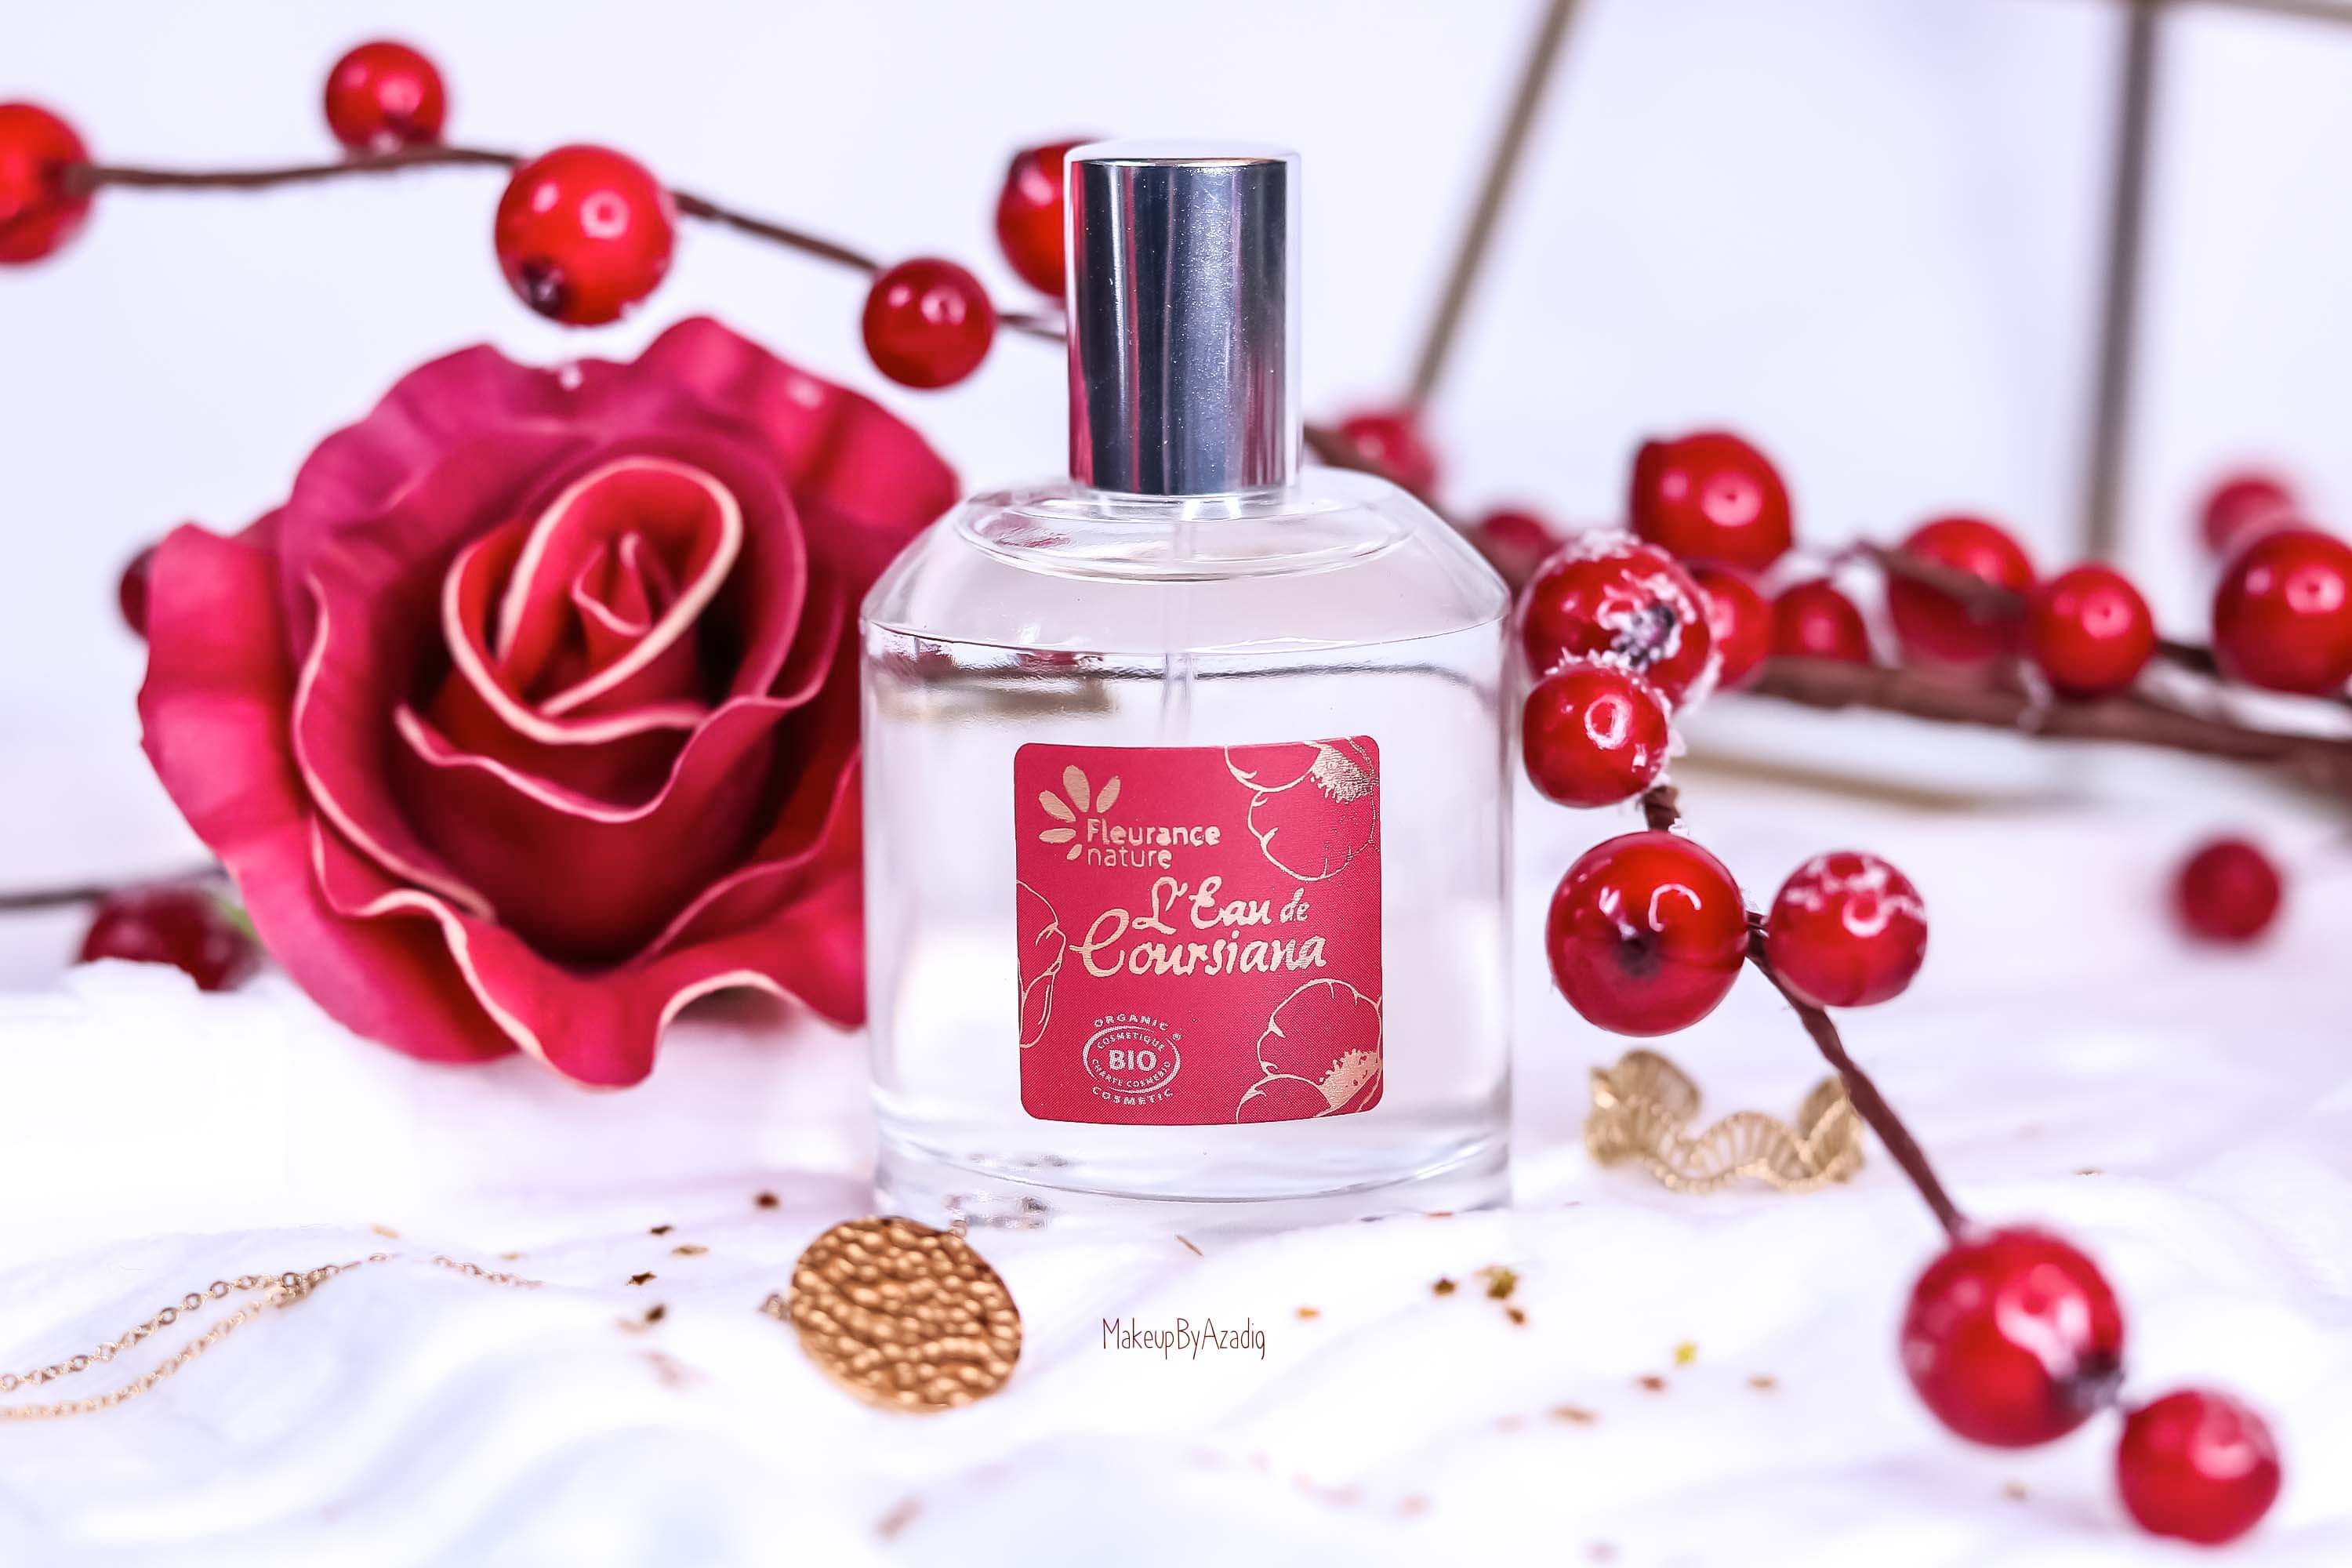 revue-parfum-bio-eau-coursiana-fleurance-nature-organic-cosmetic-makeupbyazadig-avis-prix-promo-packaging